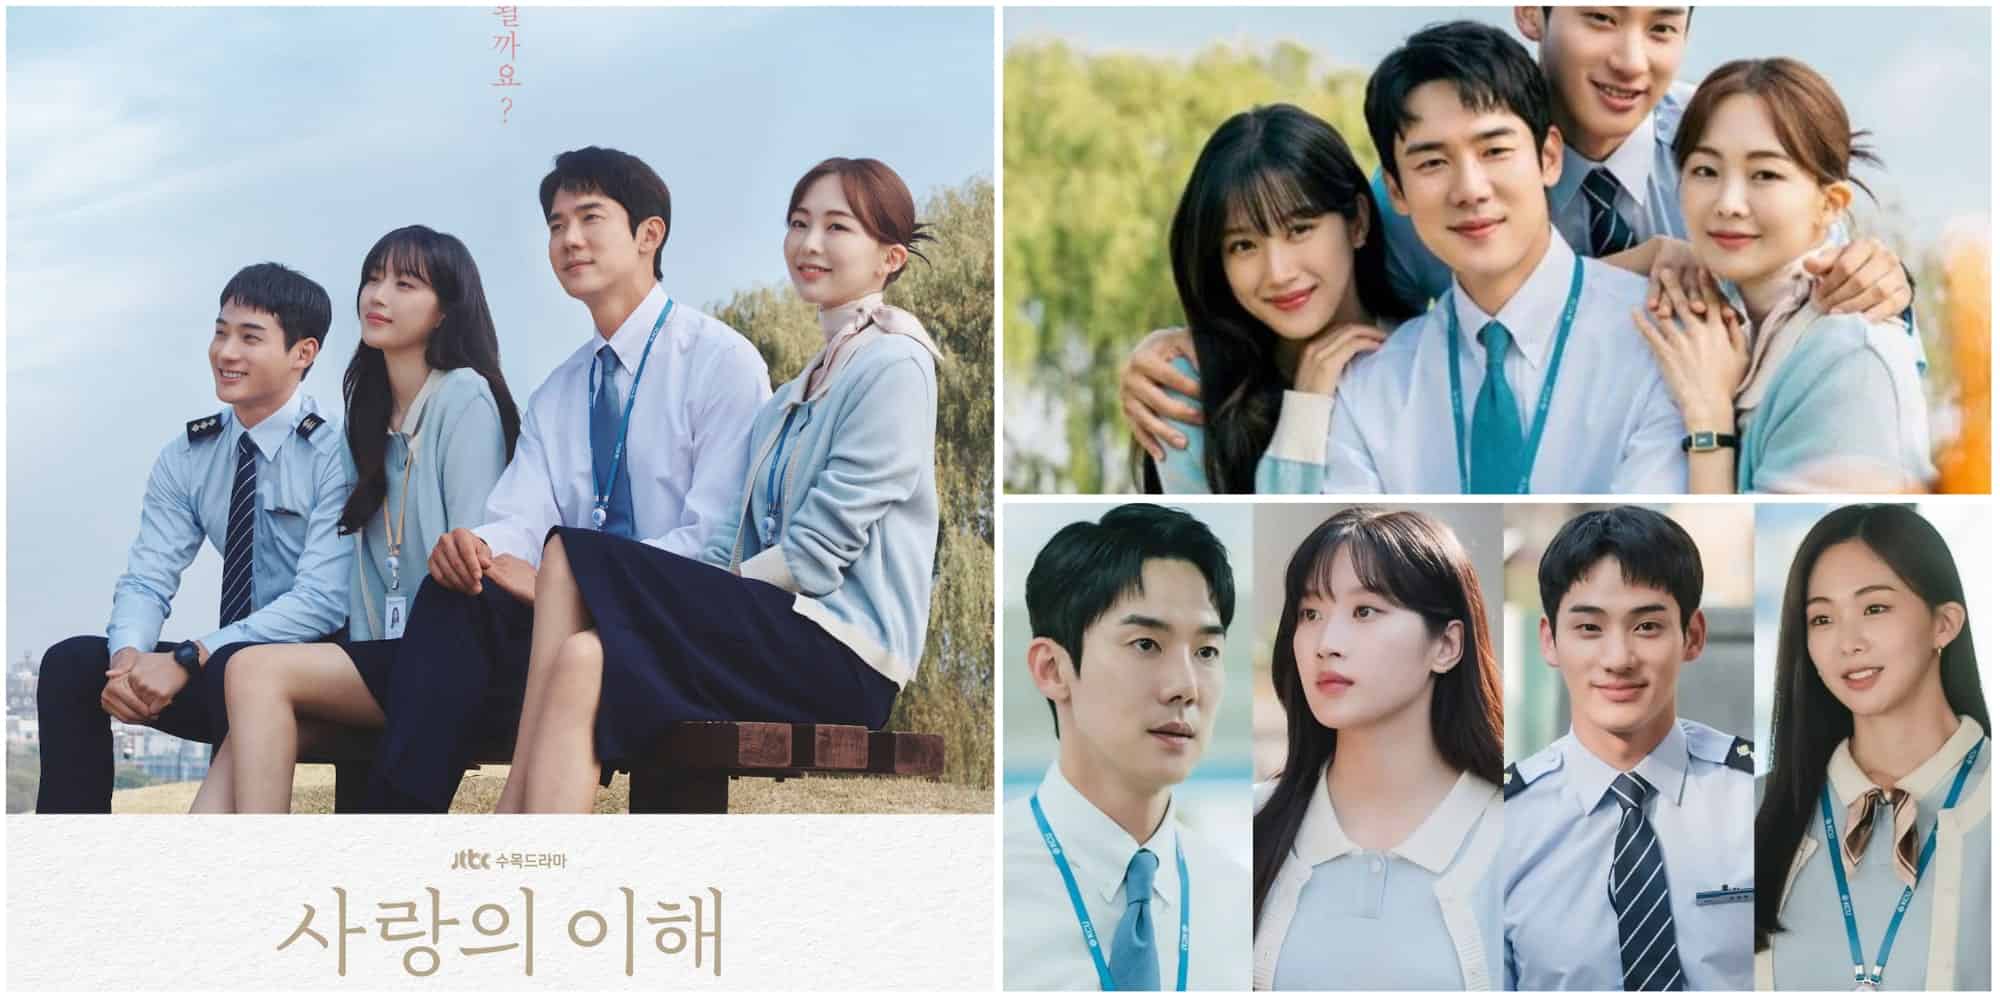 The Interest of Love Romantic K-drama Episode 15 Release Date